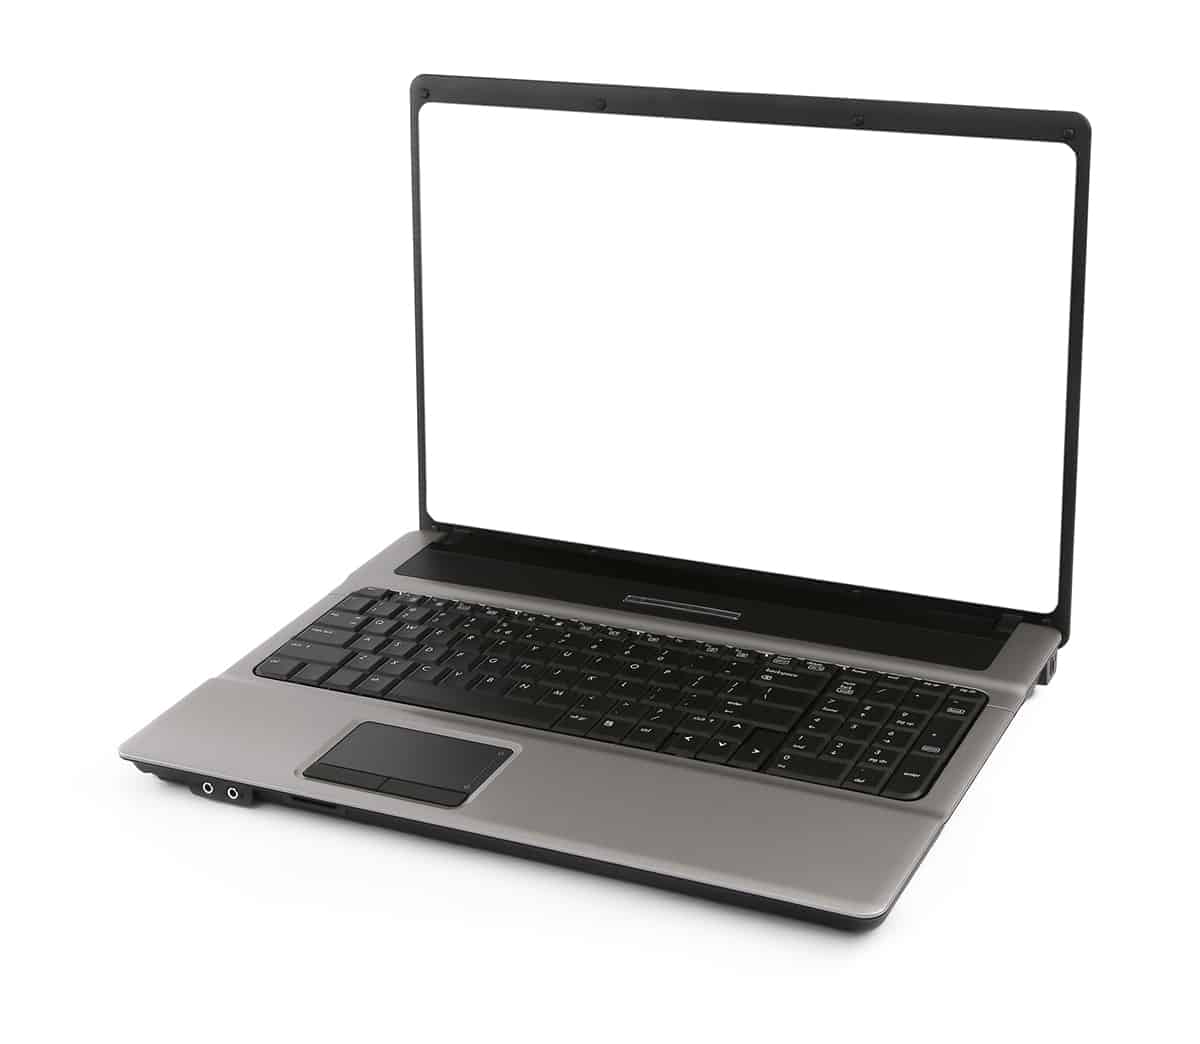 17-inch laptop